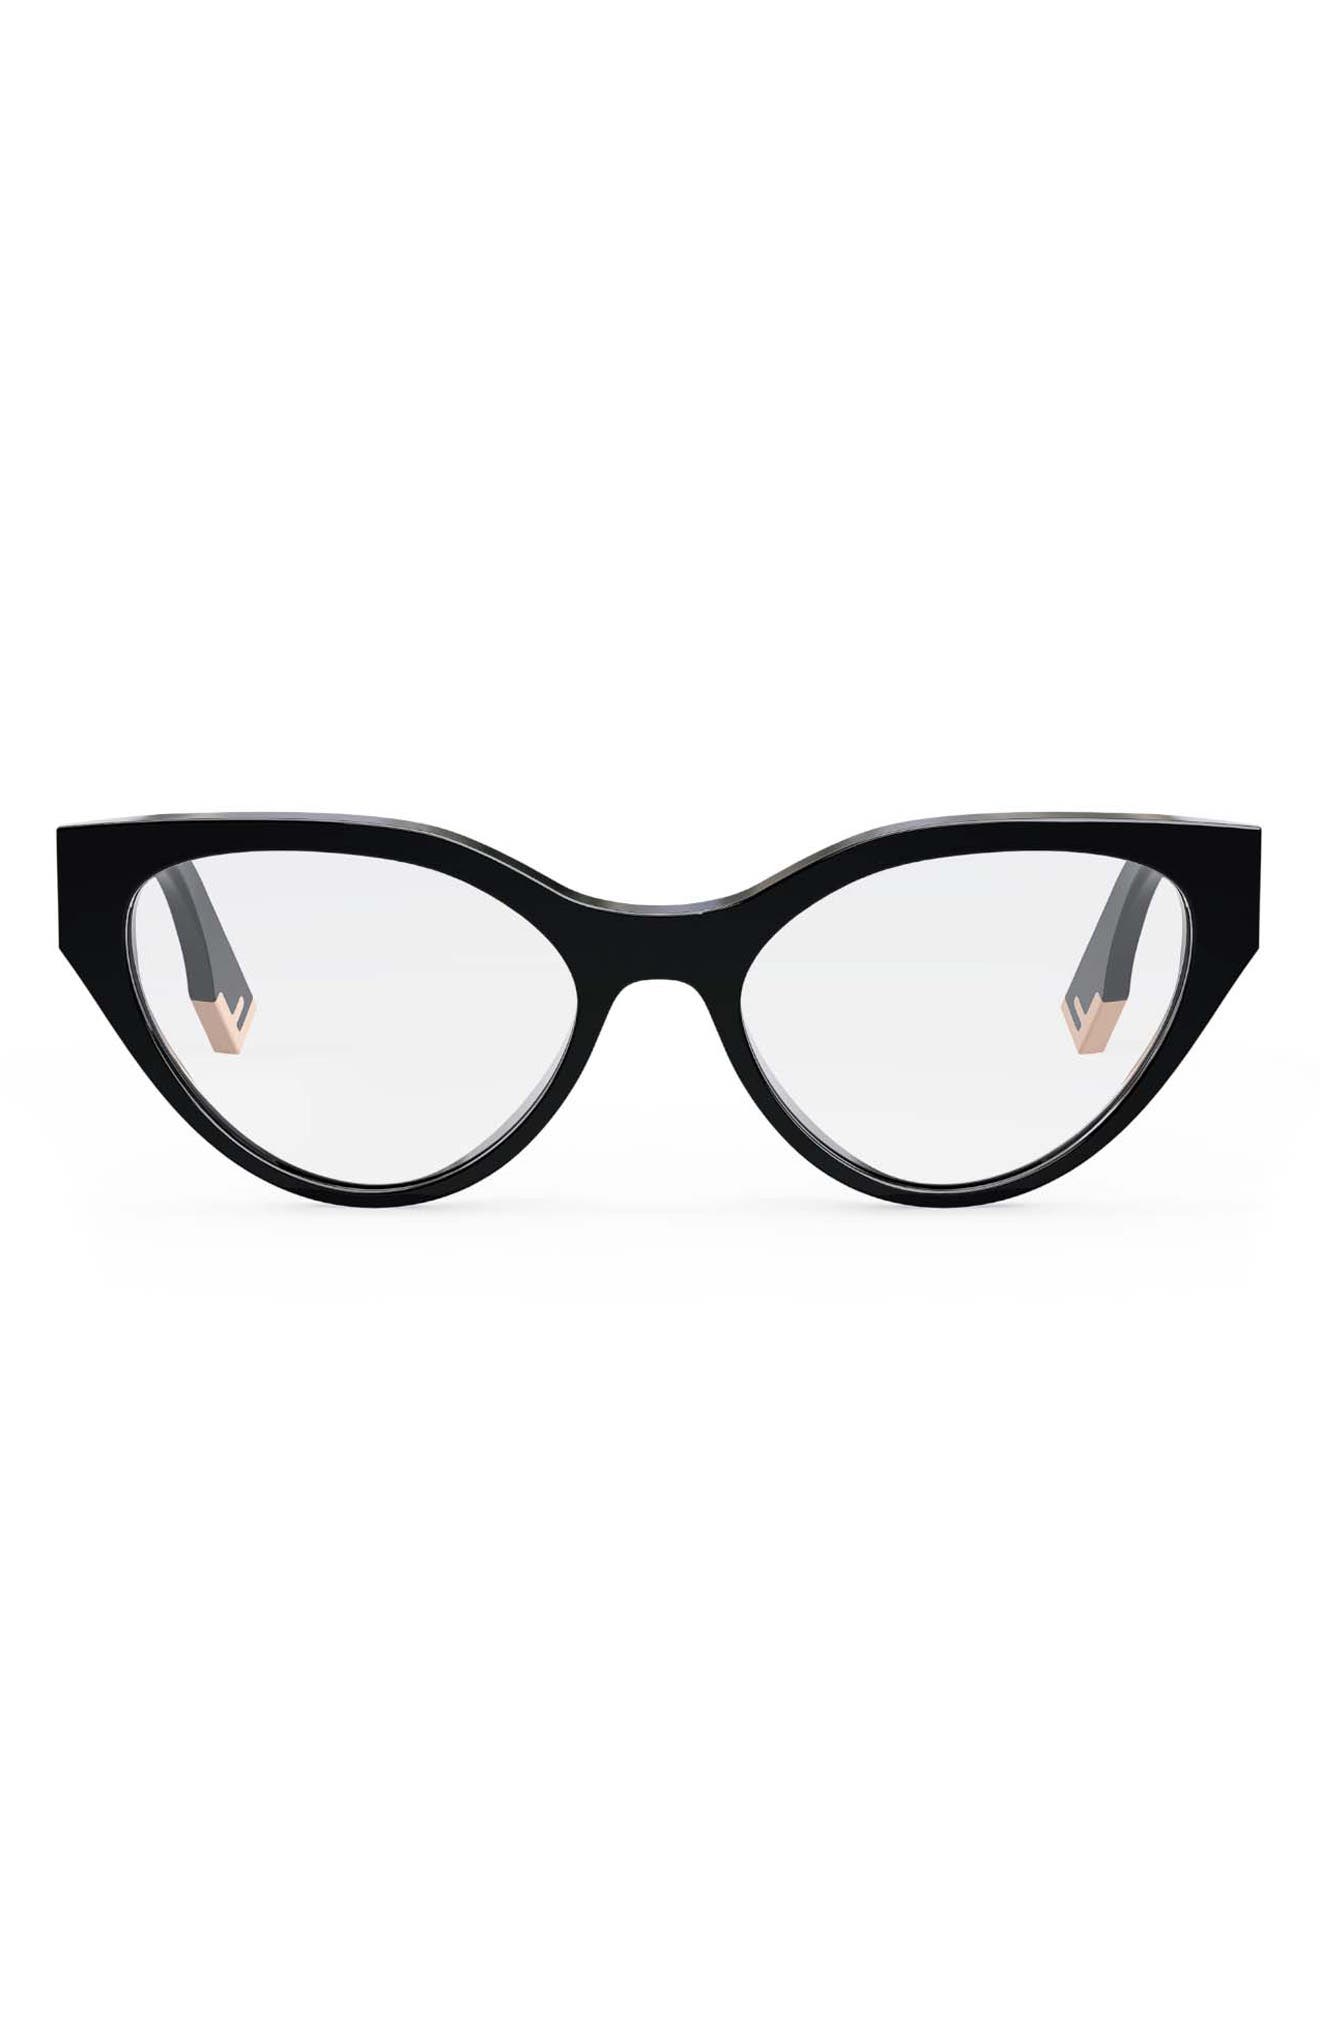 Fendi Way 53mm Cat Eye Optical Glasses in Shiny Black